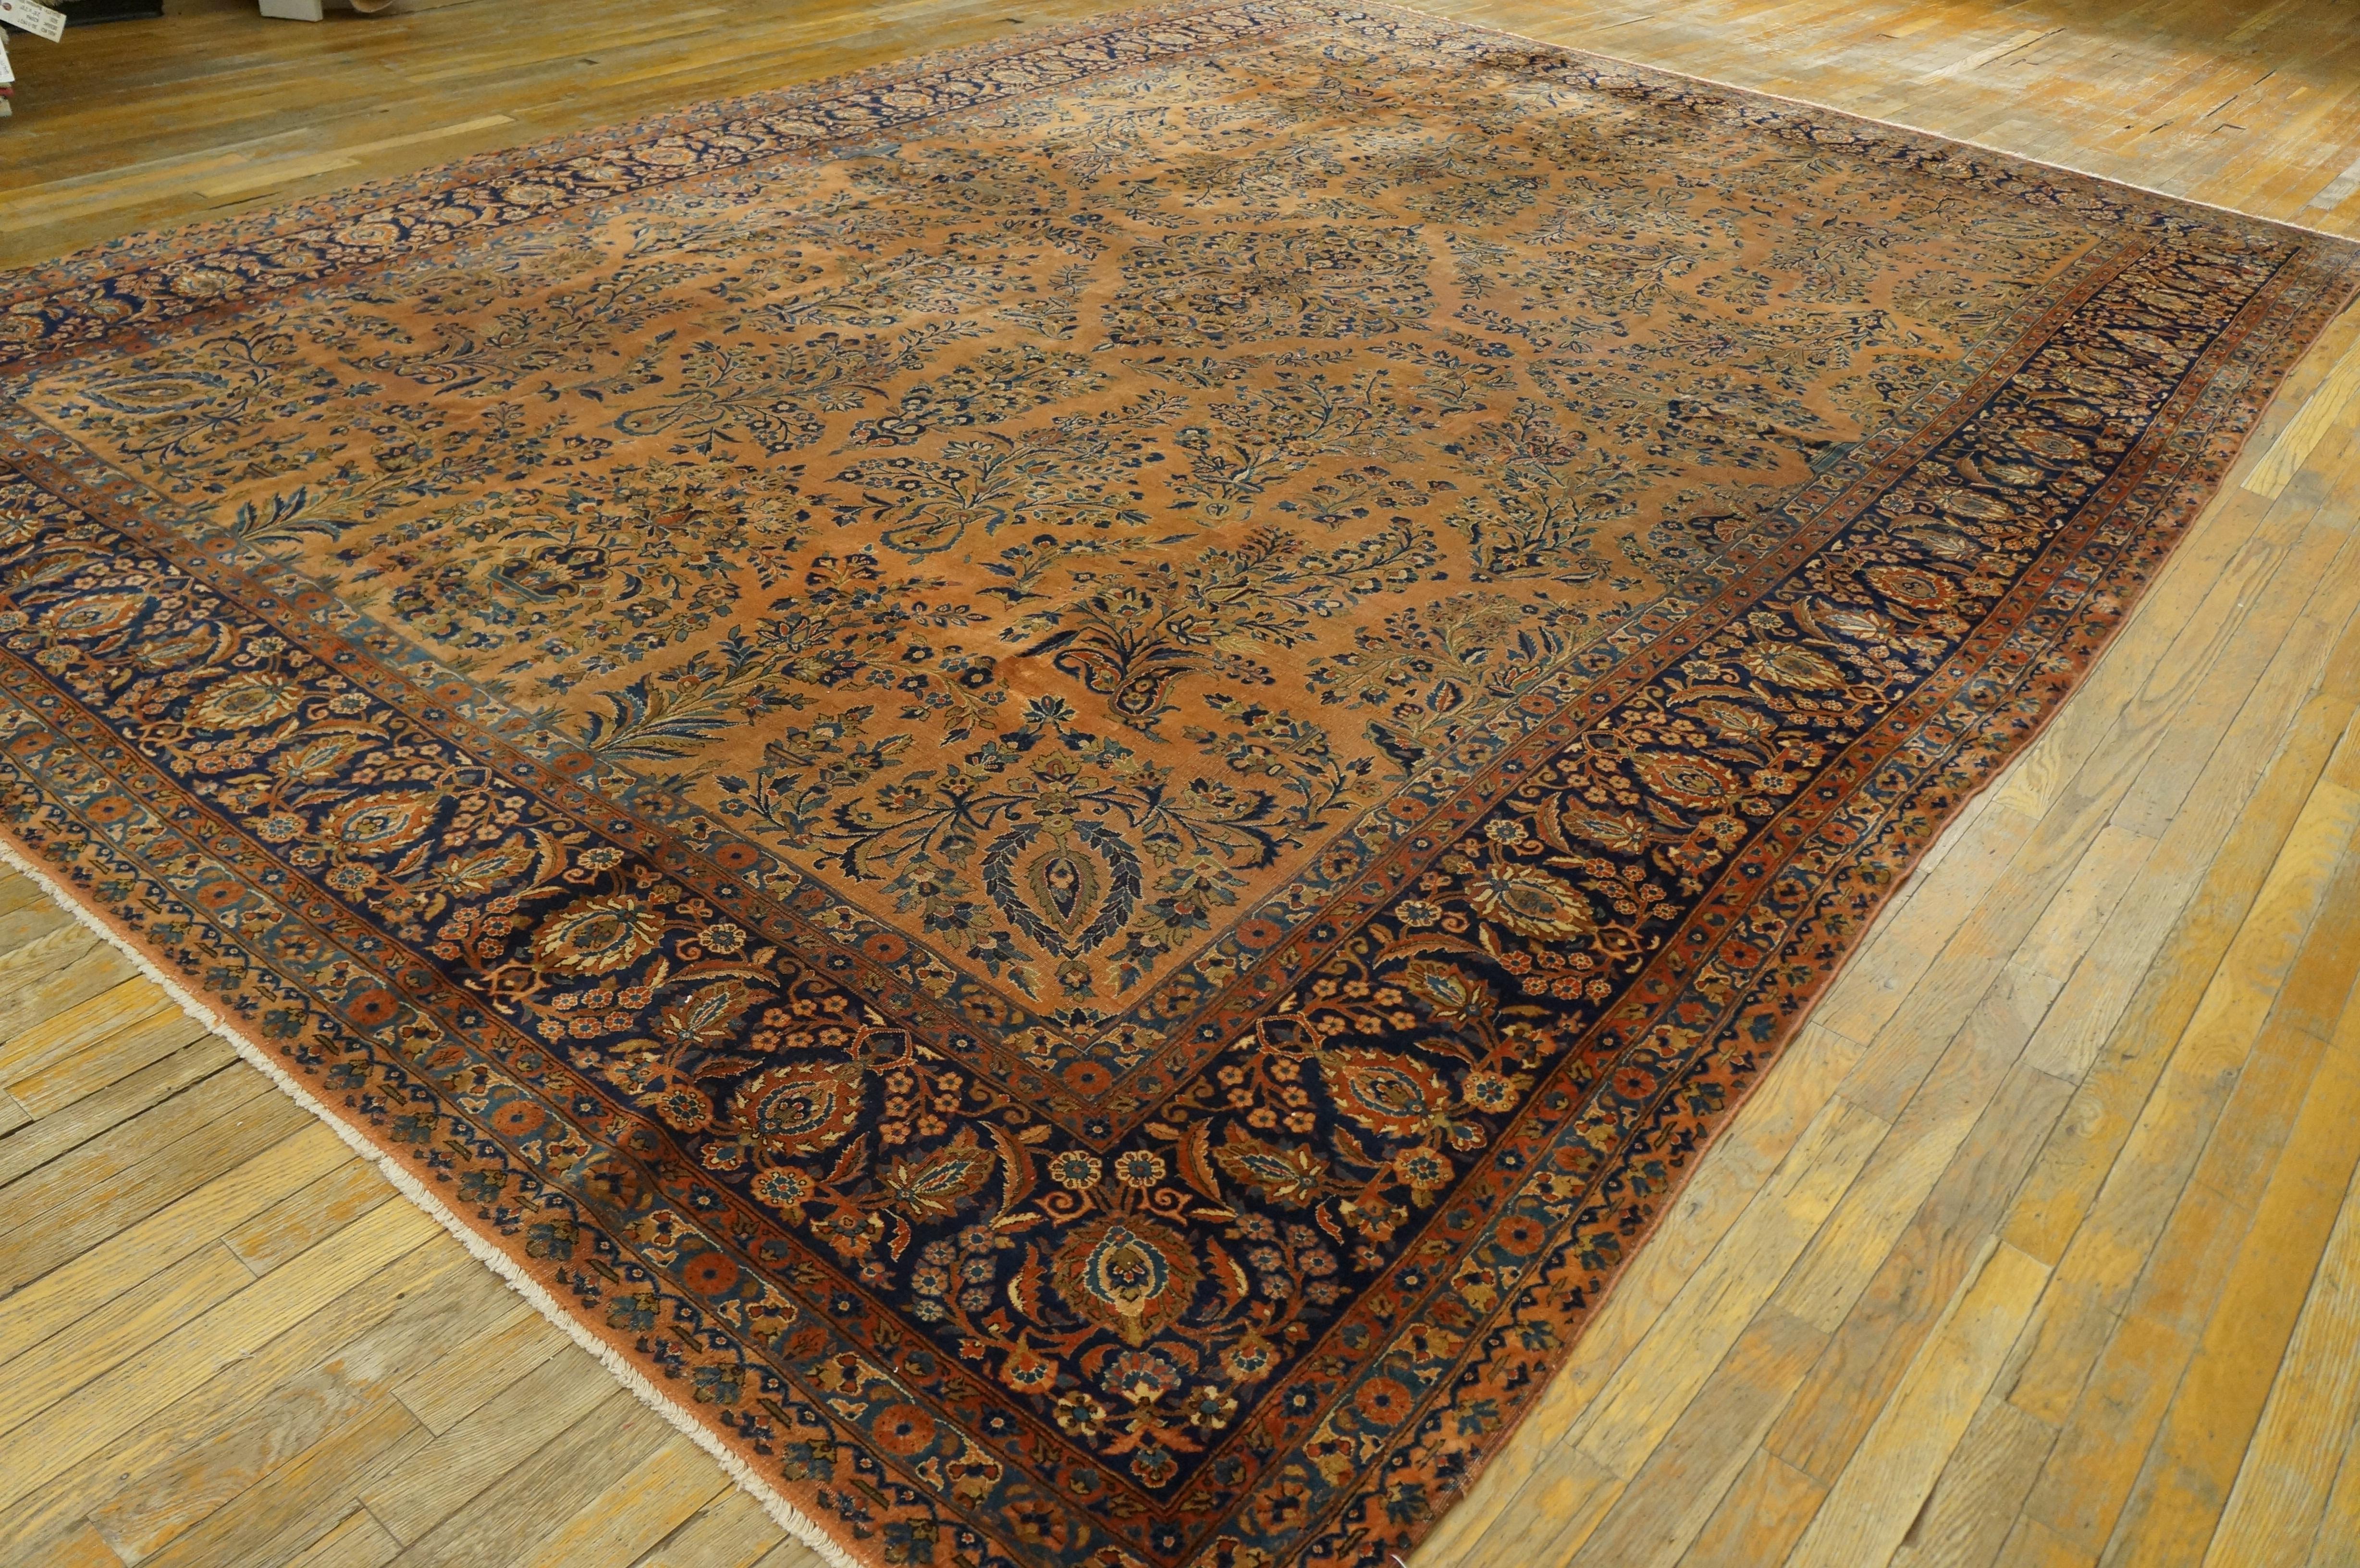 Antique Persian Kashan rug, size: 10'0